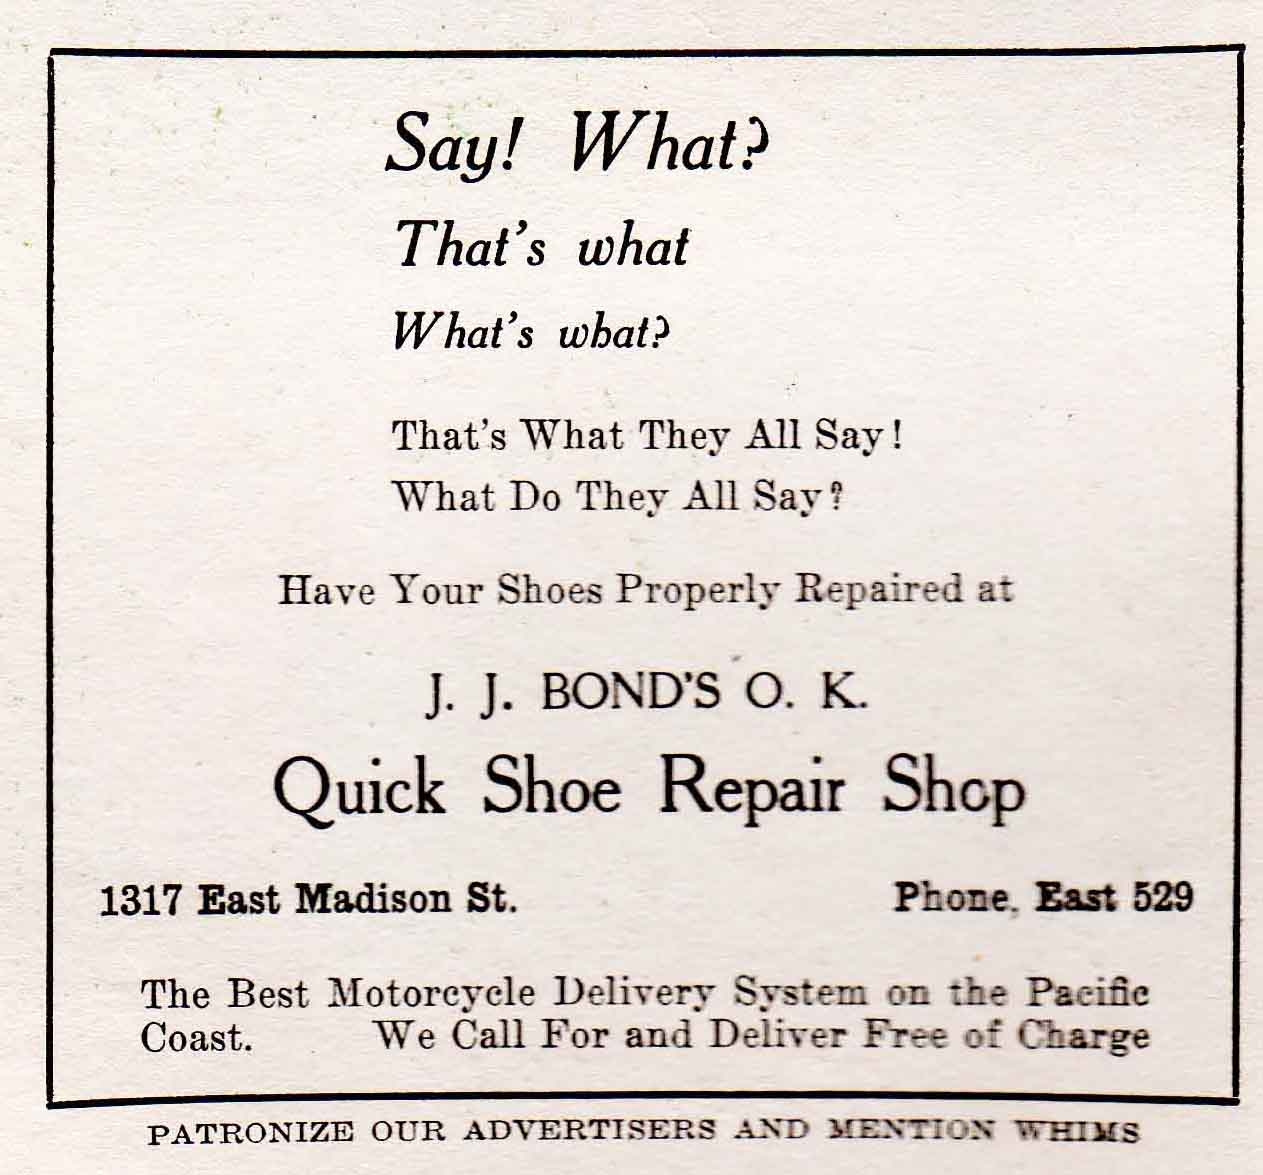 J.J. Bond's OK Quick Shoe Repair Shop